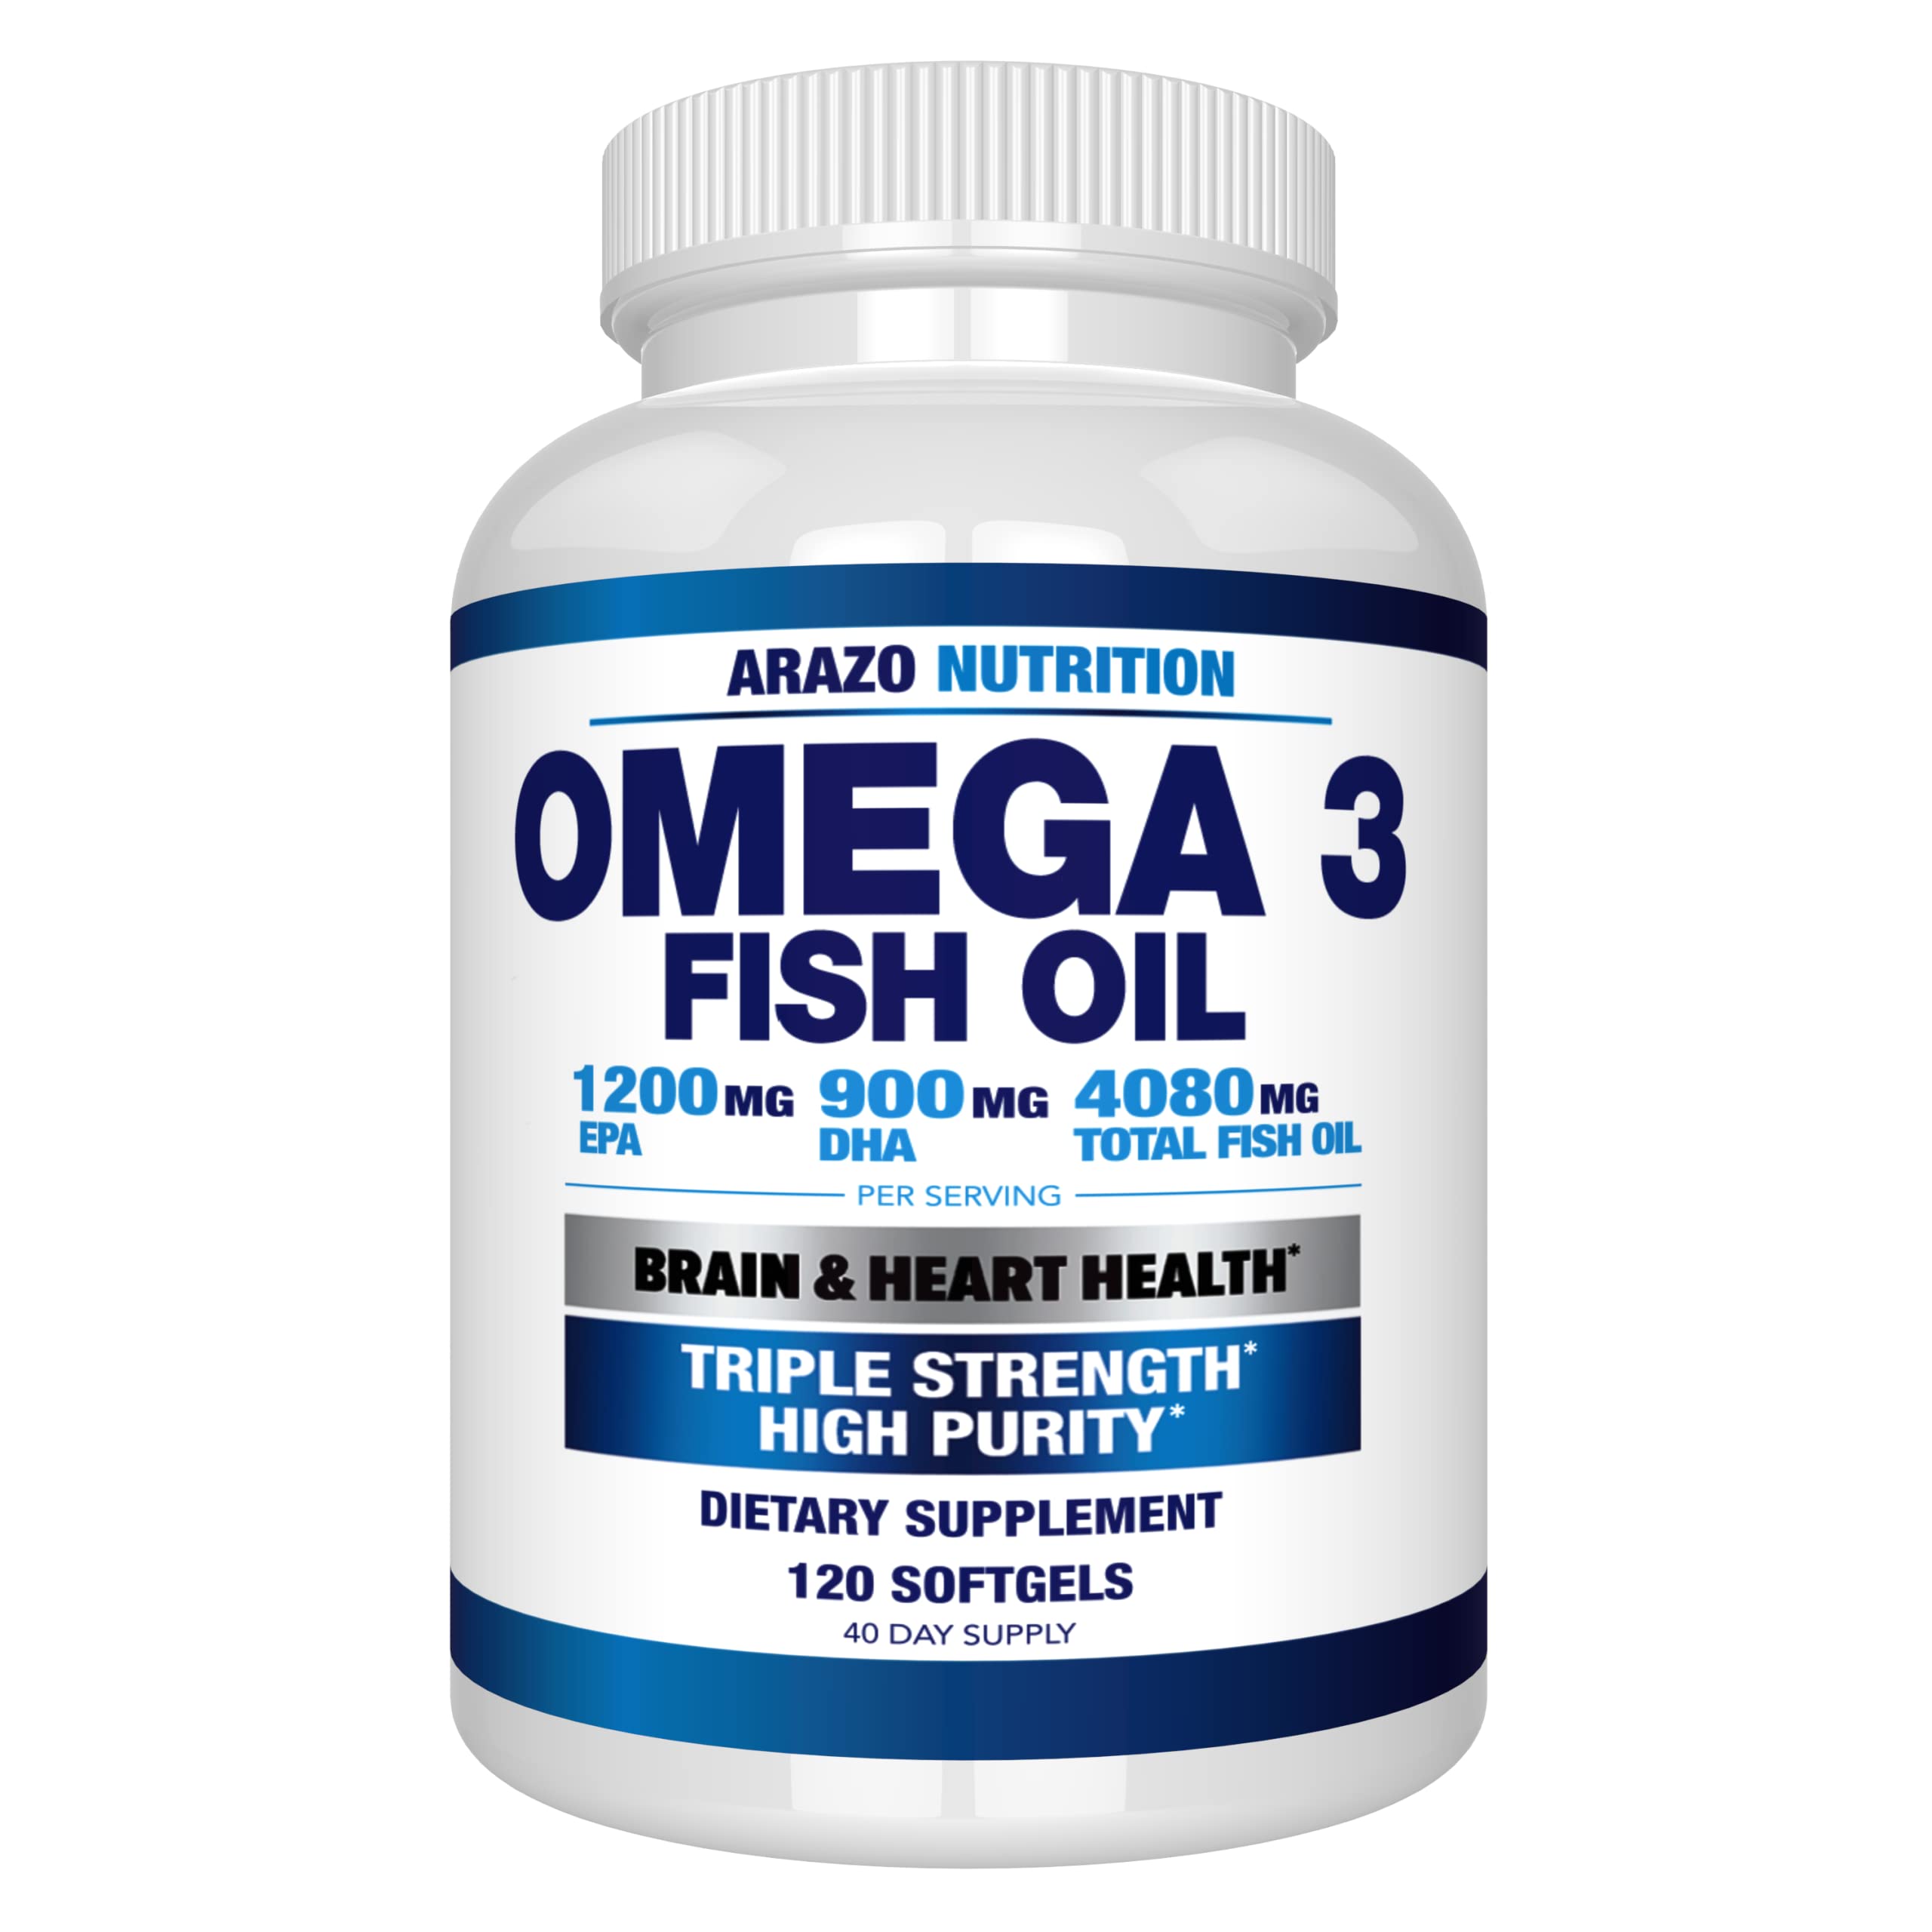 Book Cover Arazo Nutrition Omega 3 Fish Oil 4,080mg - High EPA 1200mg + DHA 900mg Triple Strength Burpless Softgels (120 Soft Gels) 40.0 Servings (Pack of 1)